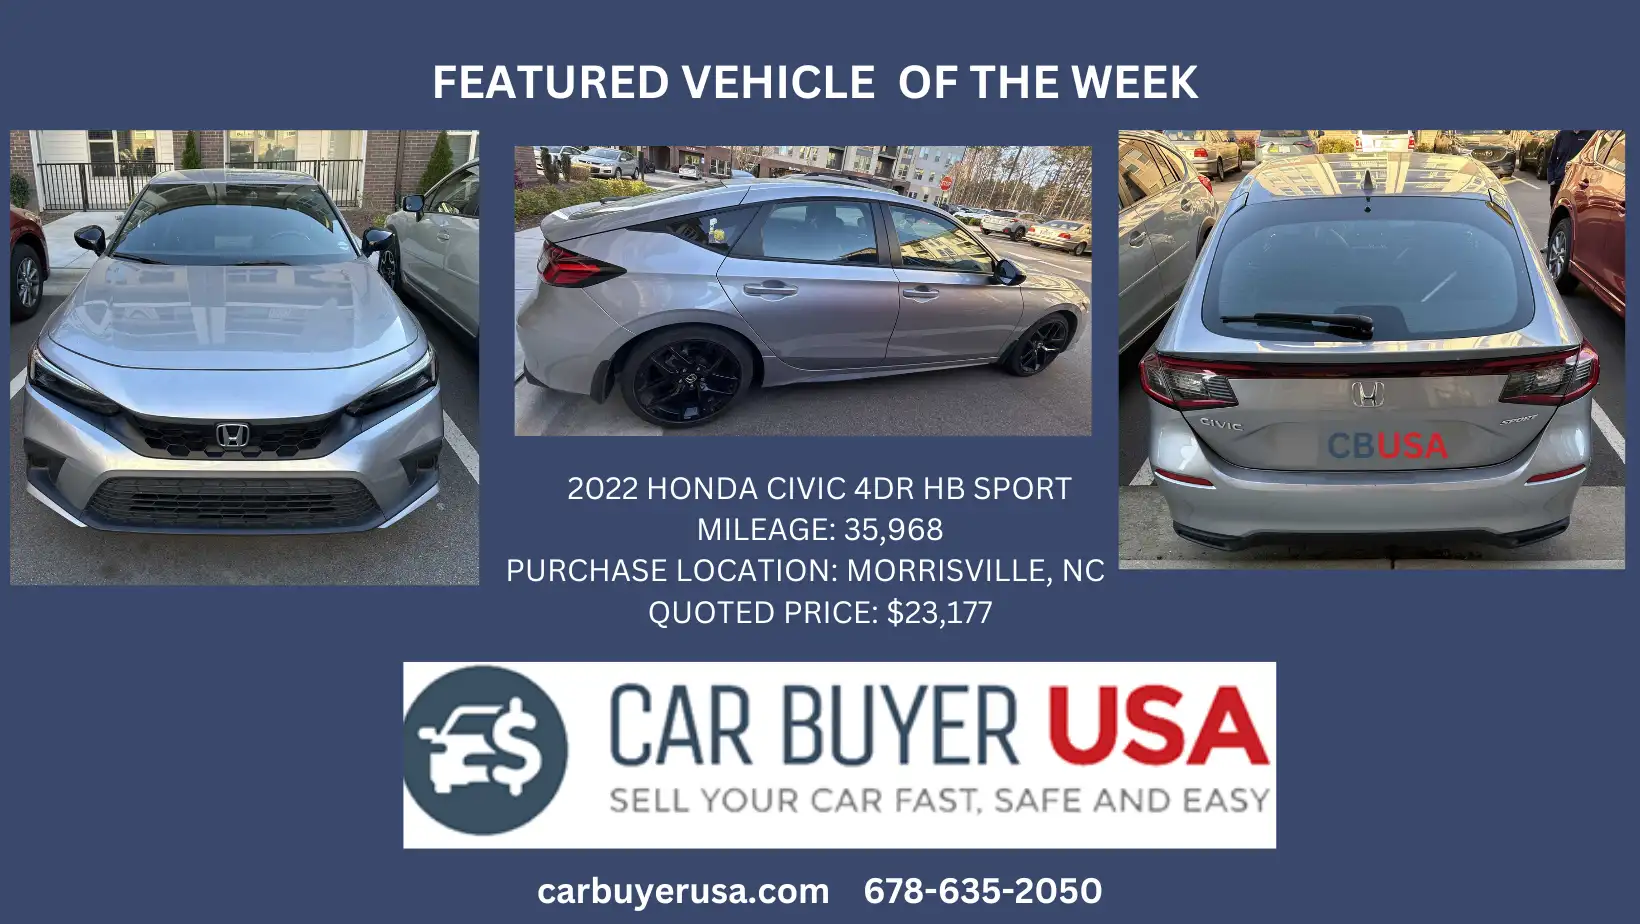 Car Buyer USA - 2022 HONDA CIVIC 4DR HB SPORT - $23,177